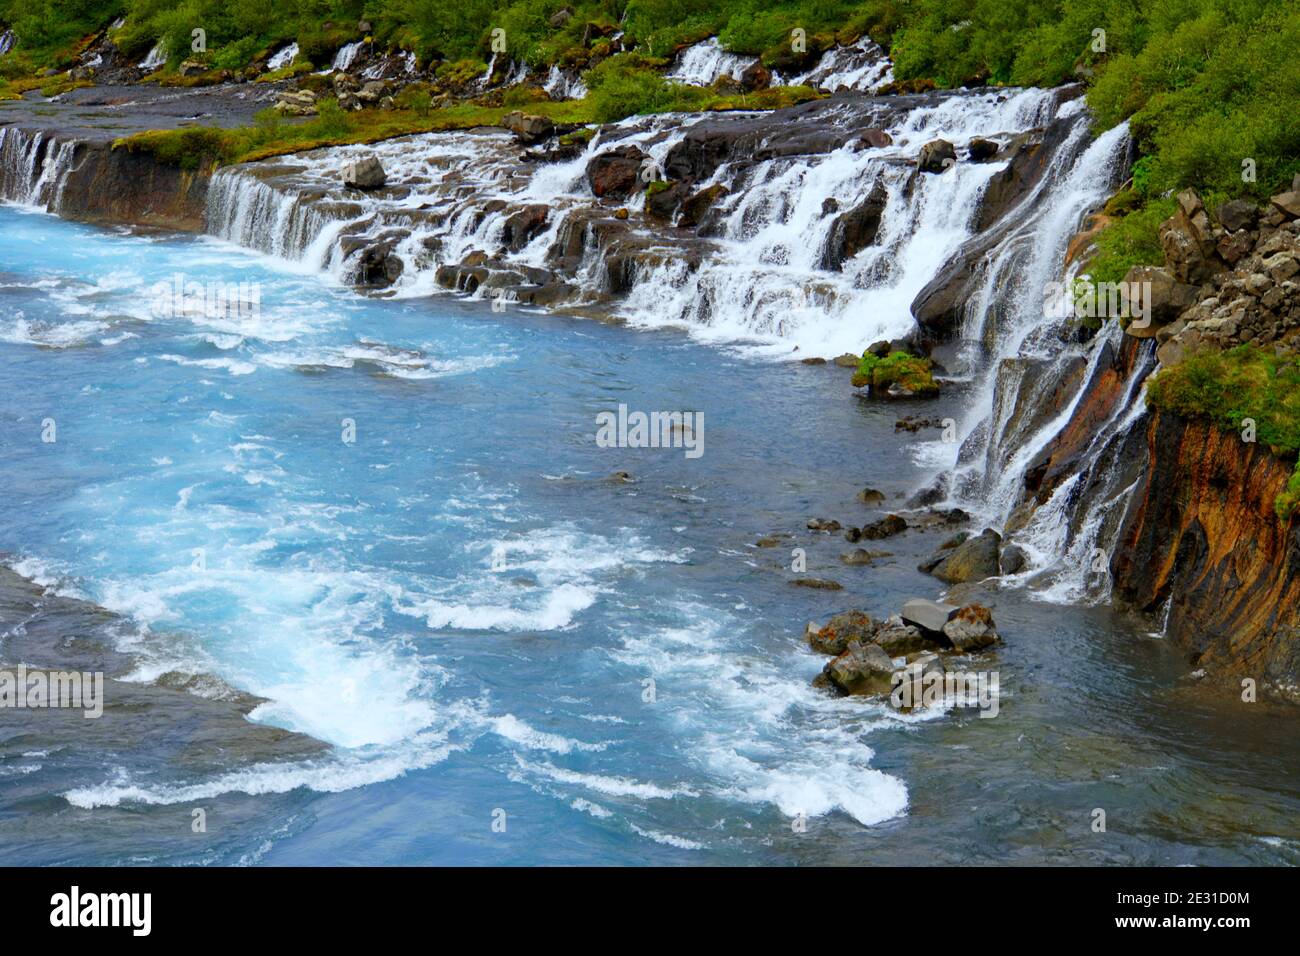 Les belles cascades bleues de Barnafoss dans l'ouest de l'Islande Banque D'Images